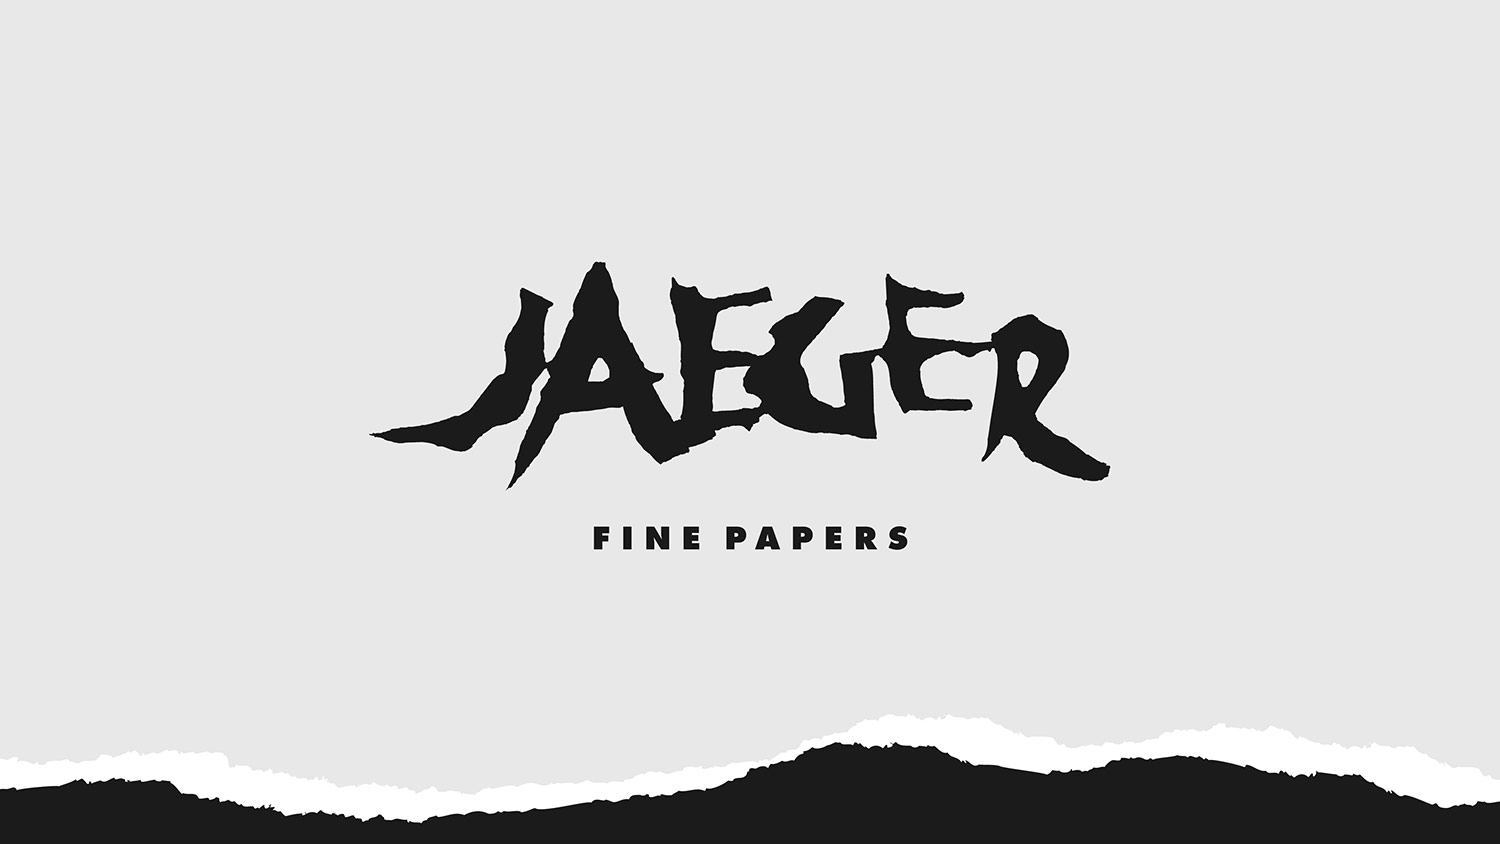 Jaeger Fine Papers Logo, 1984